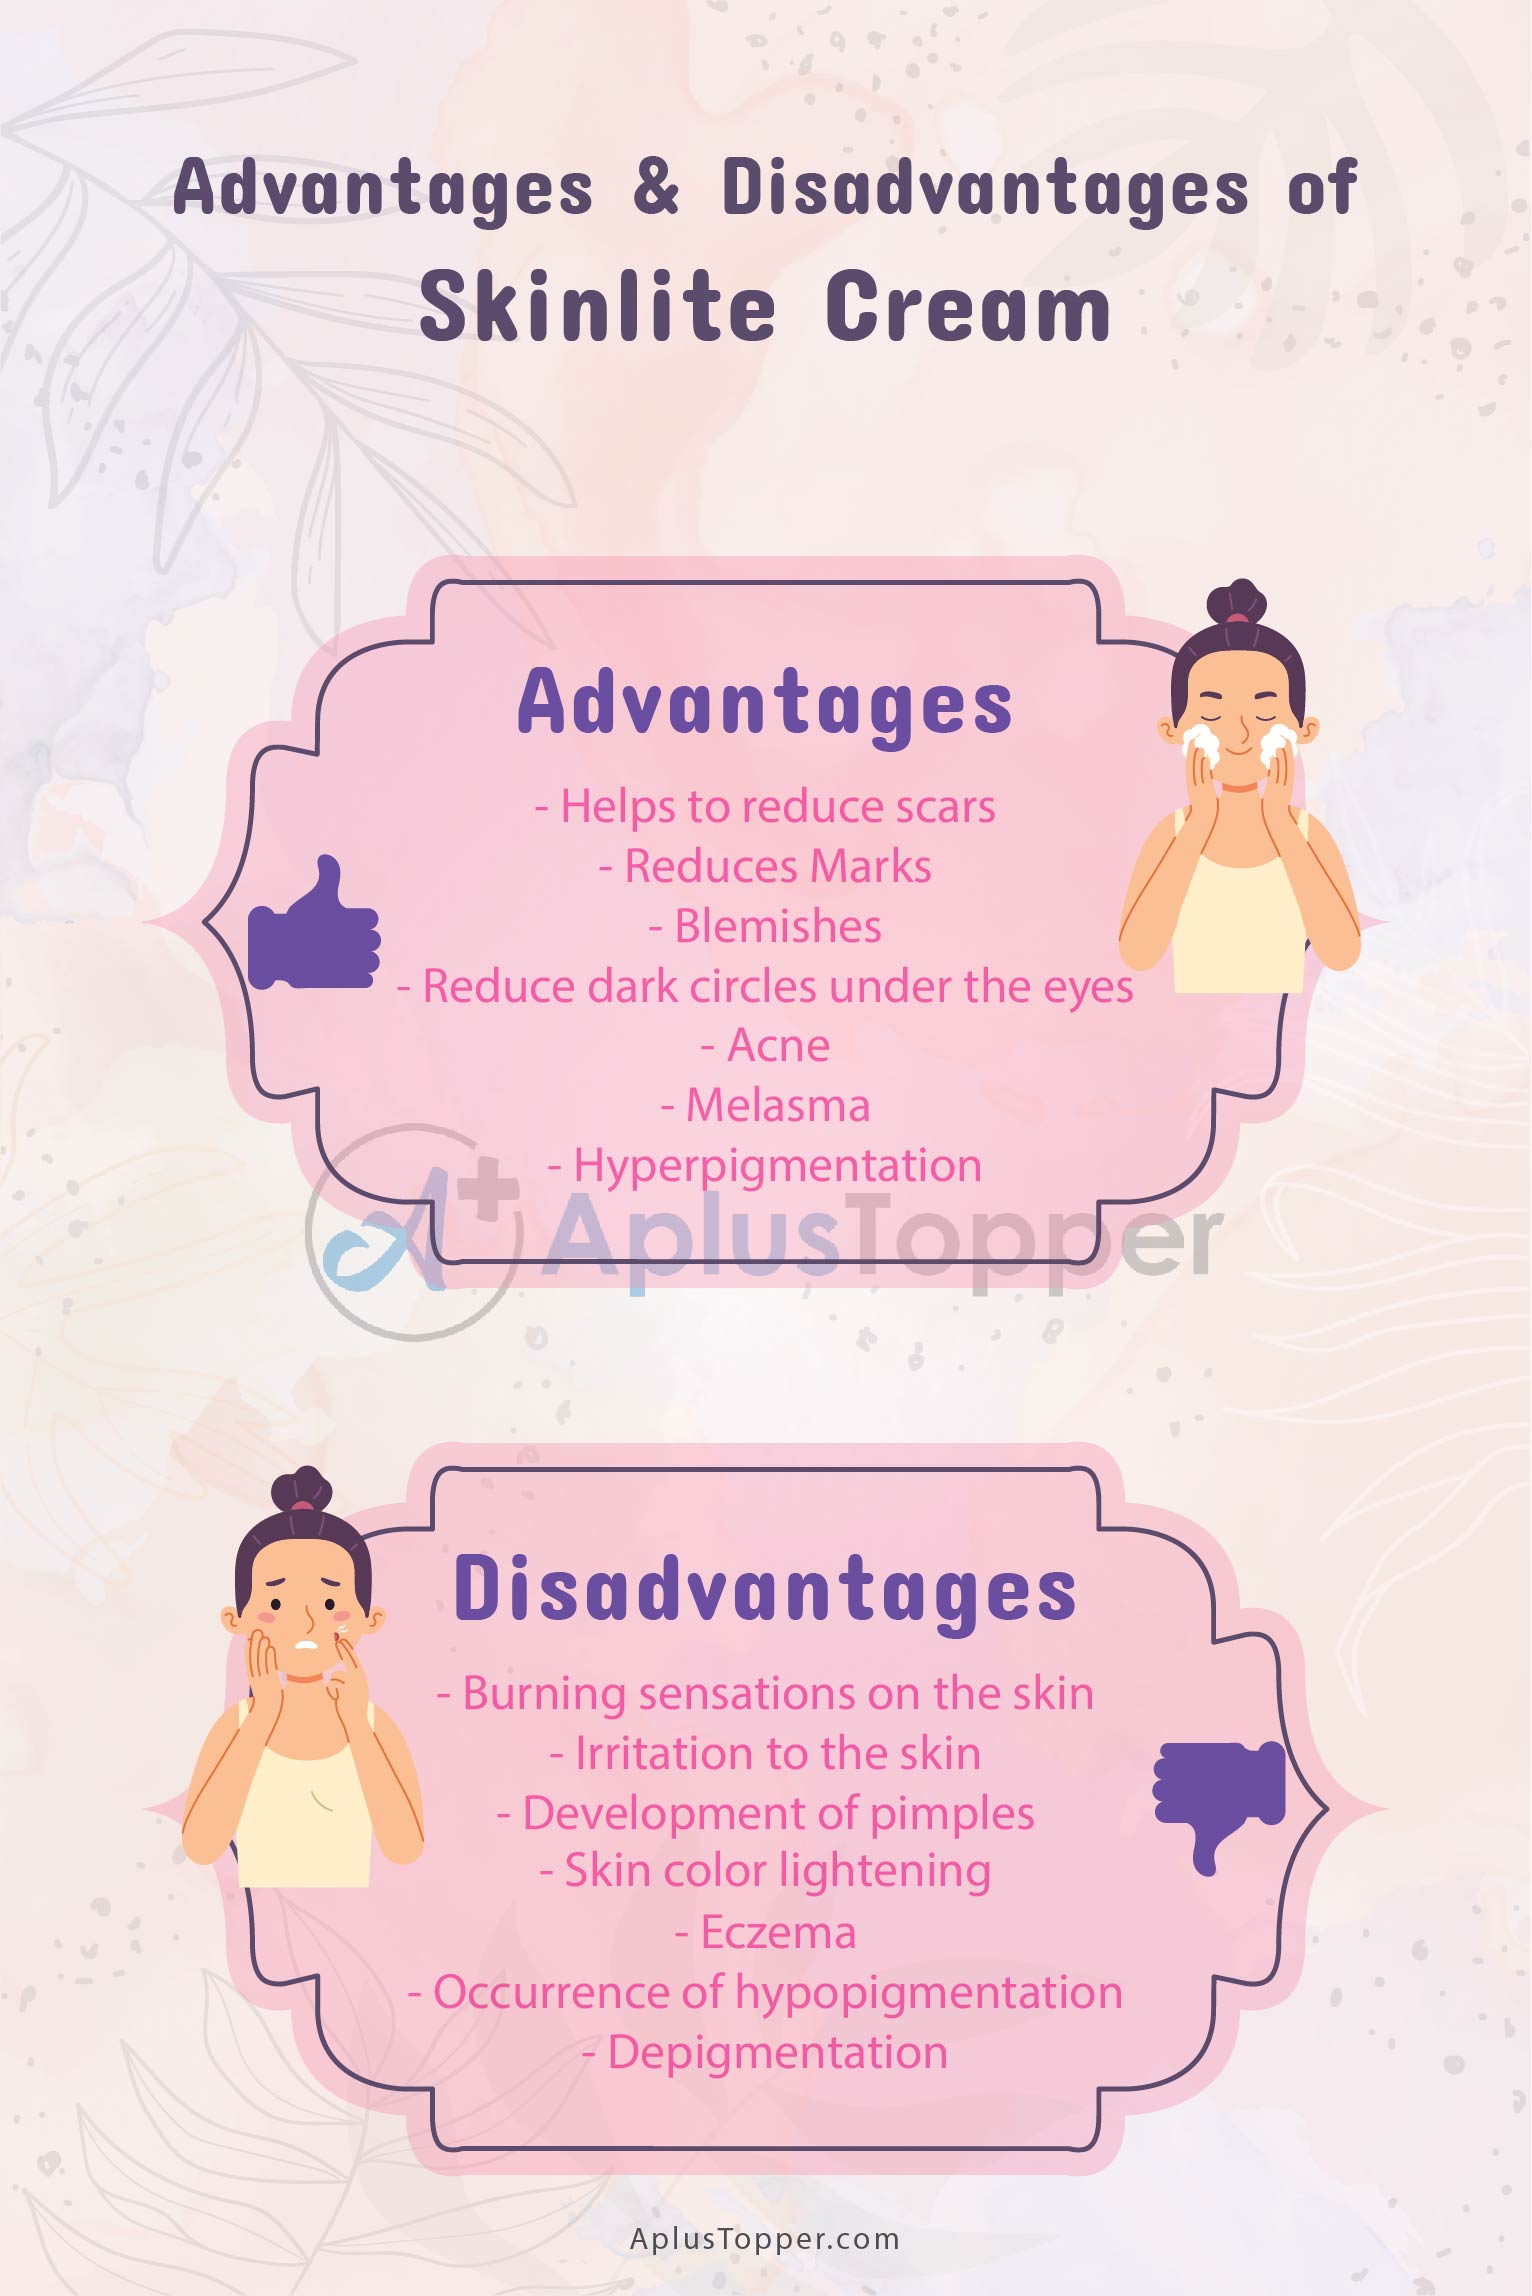 Skinlite Cream Advantages and Disadvantages 2